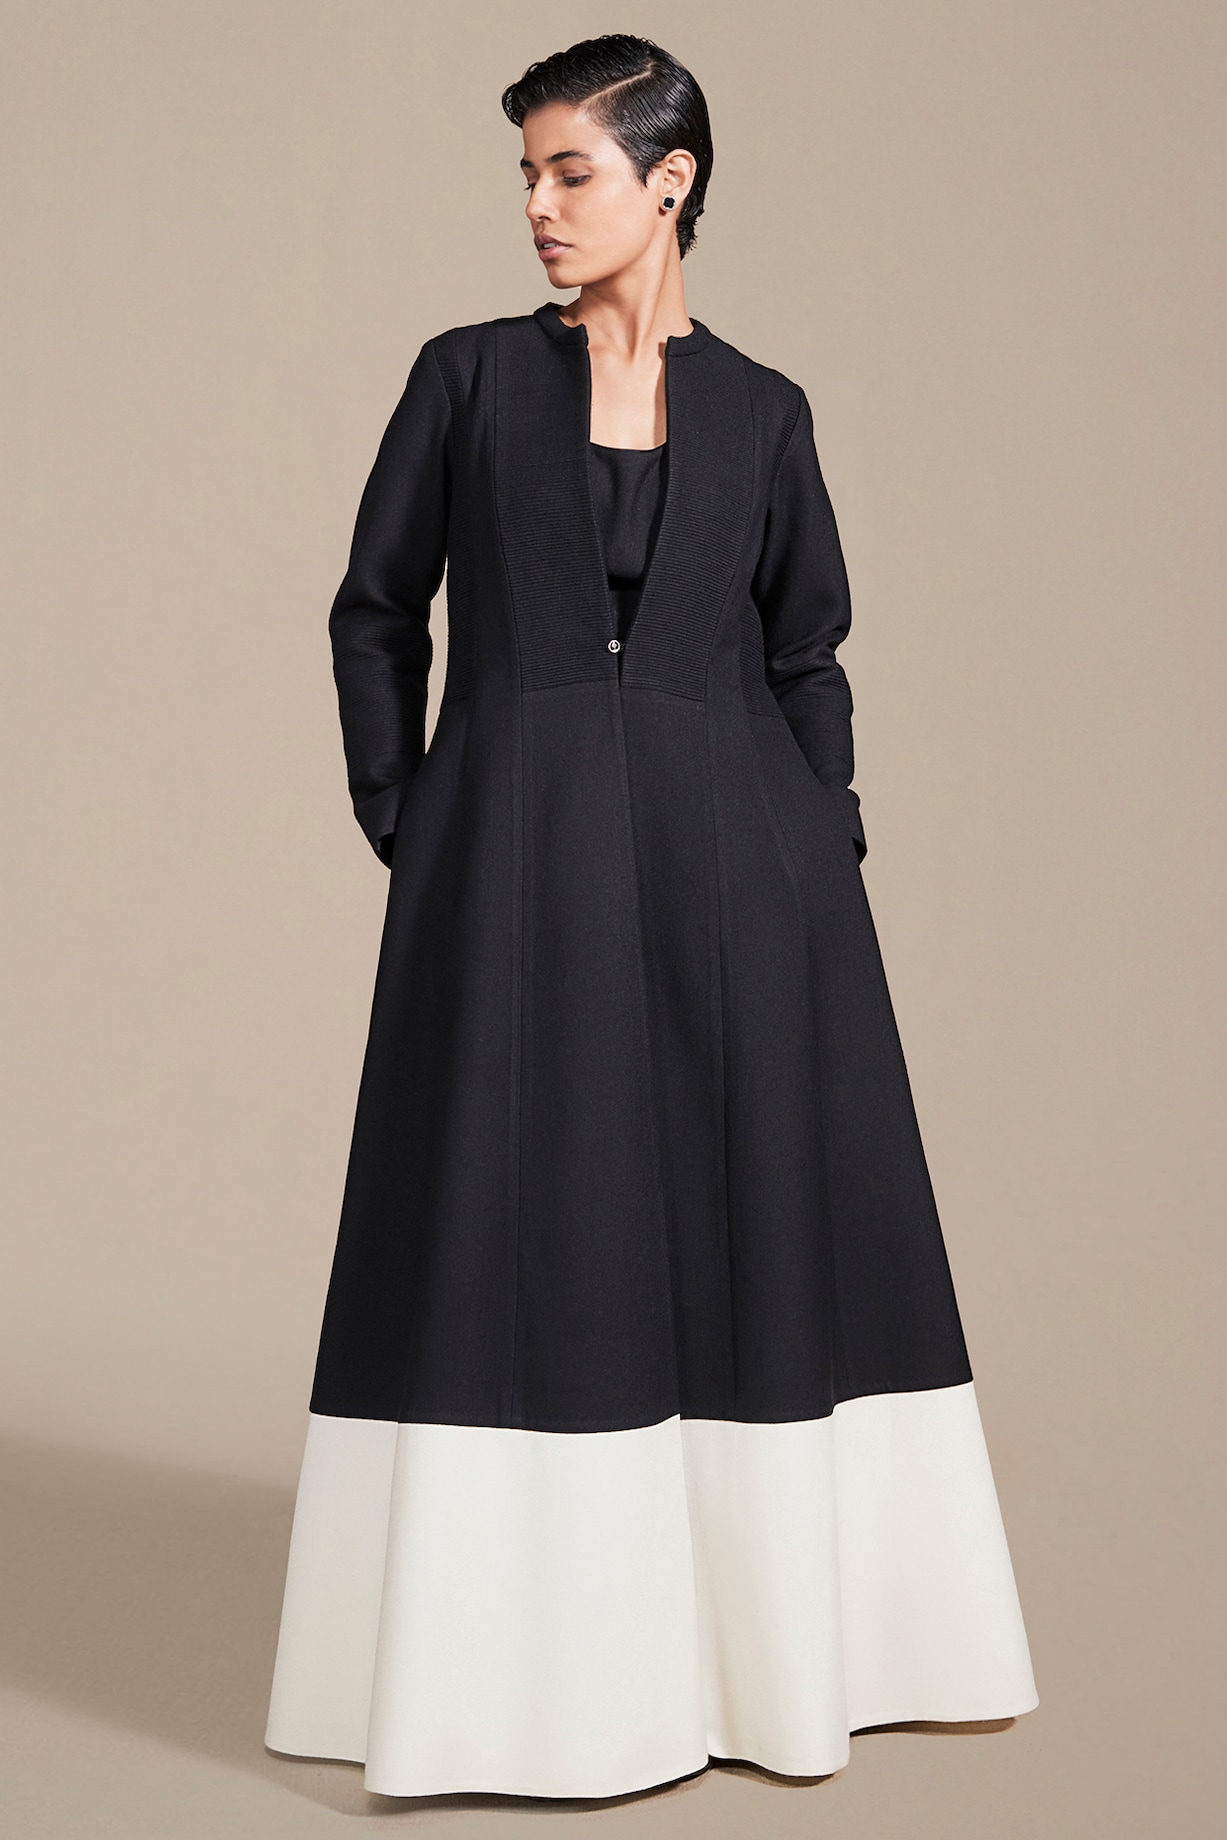 Black Woolen Pants Design by AMPM at Pernia's Pop Up Shop 2024